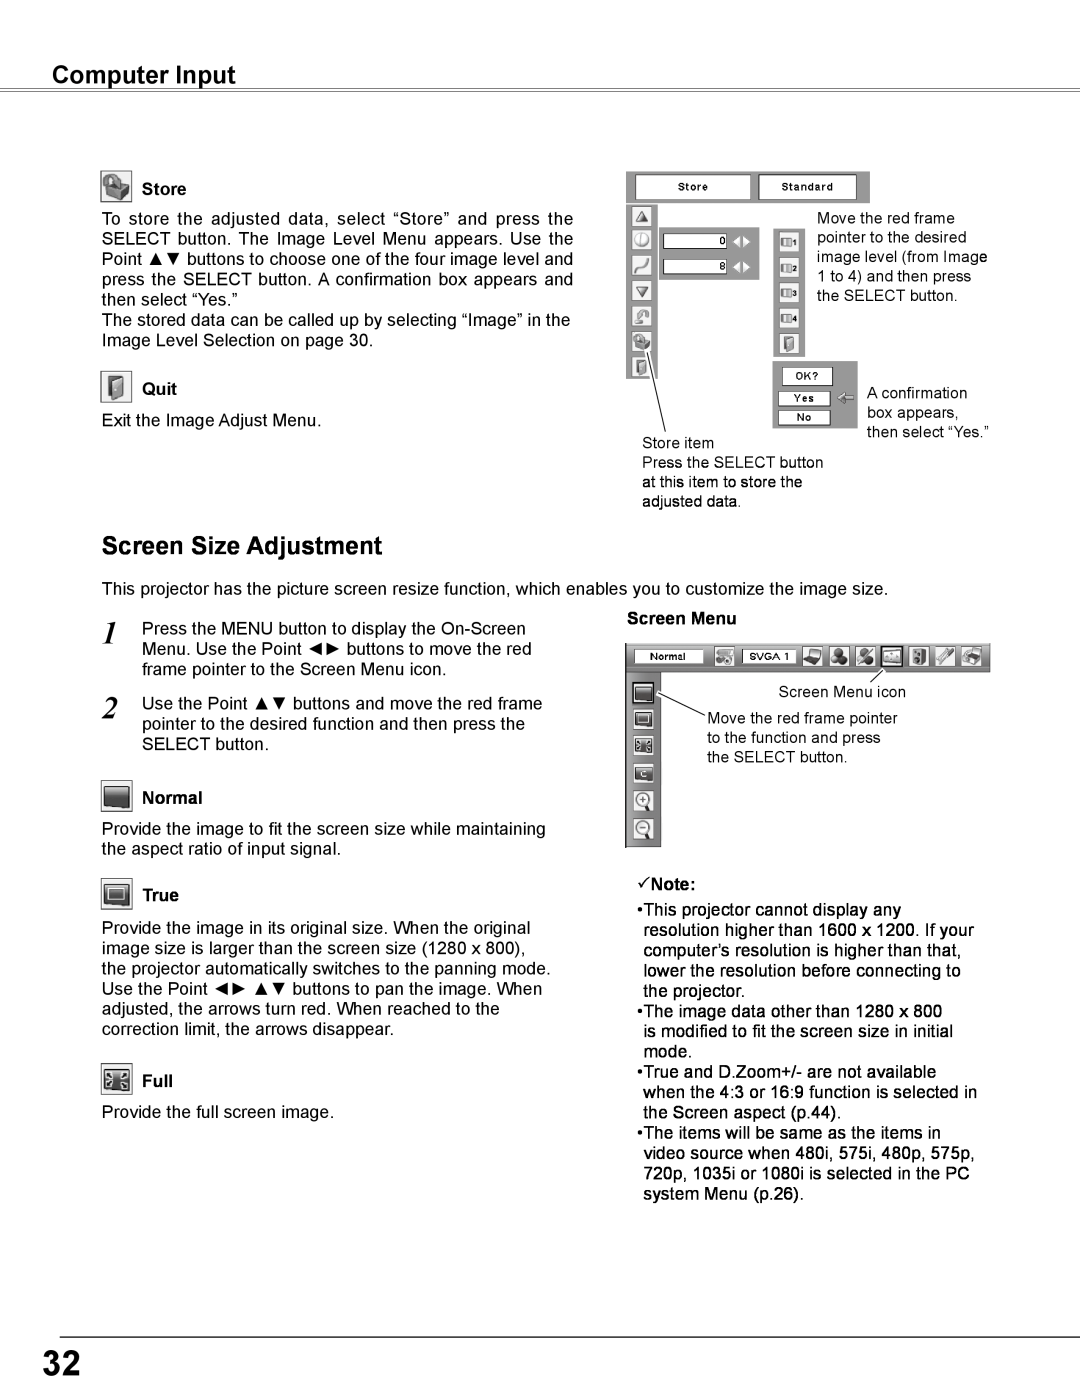 Sanyo PLC-WXL46 owner manual Screen Size Adjustment, Computer Input, Store, Quit, Normal, True, Full, Screen Menu, Note 